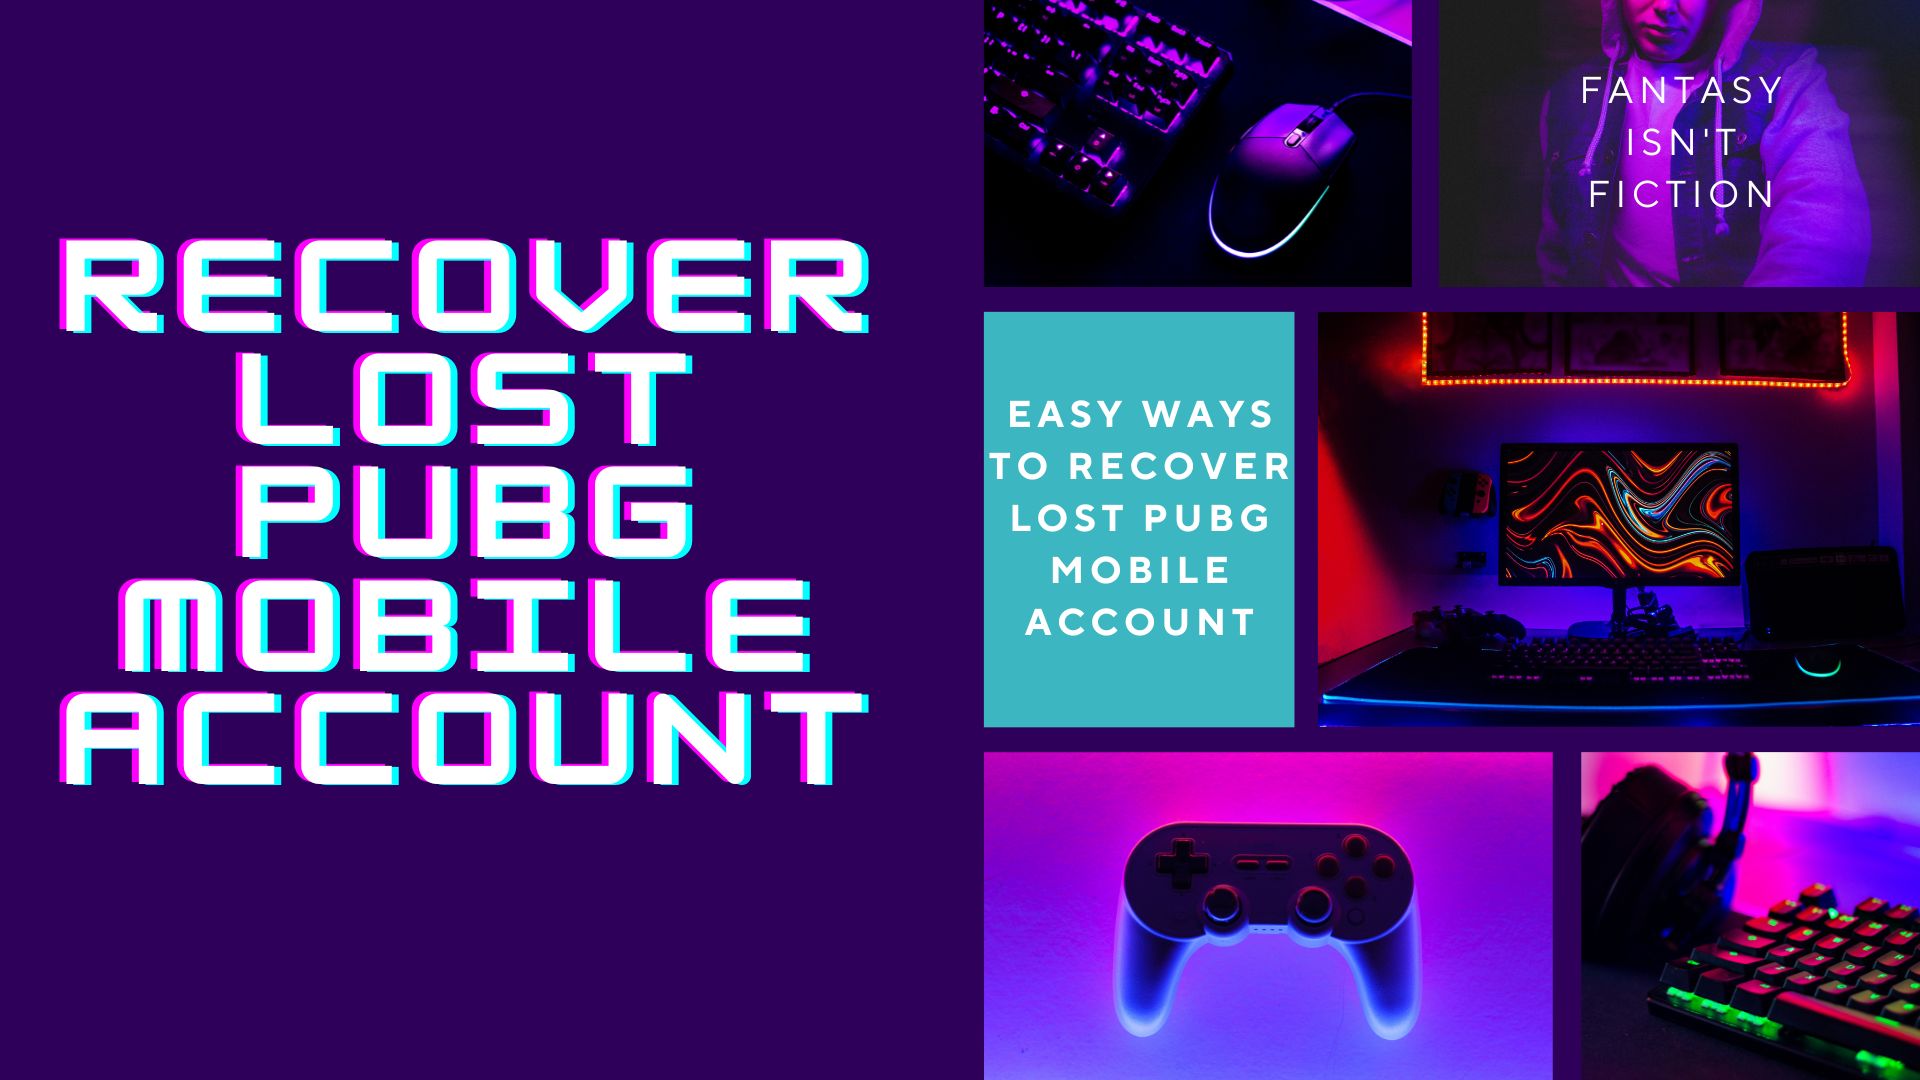 Recover lost PUBG mobile account